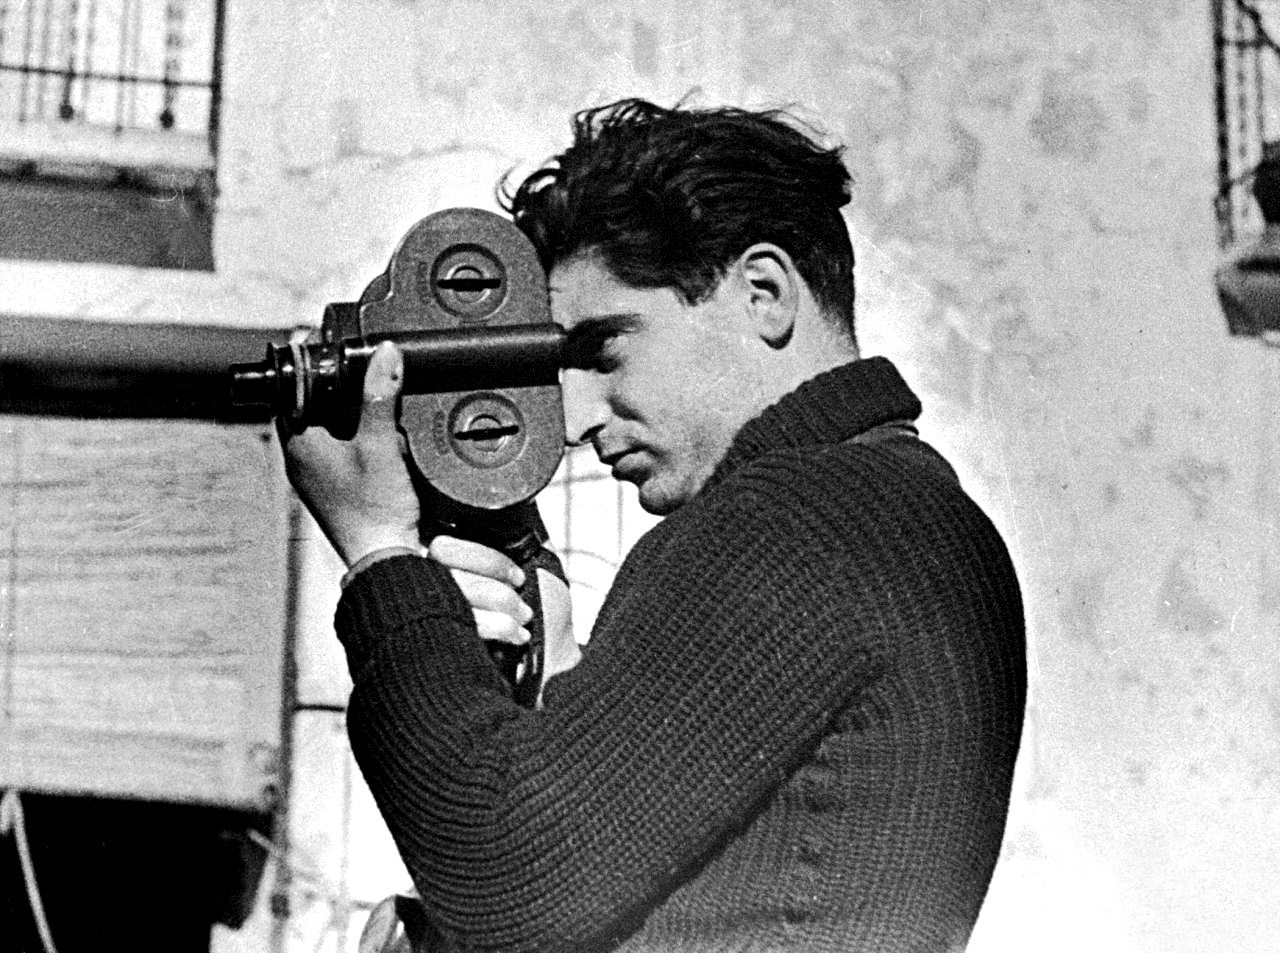 Robert Capa, photographer, Hungary